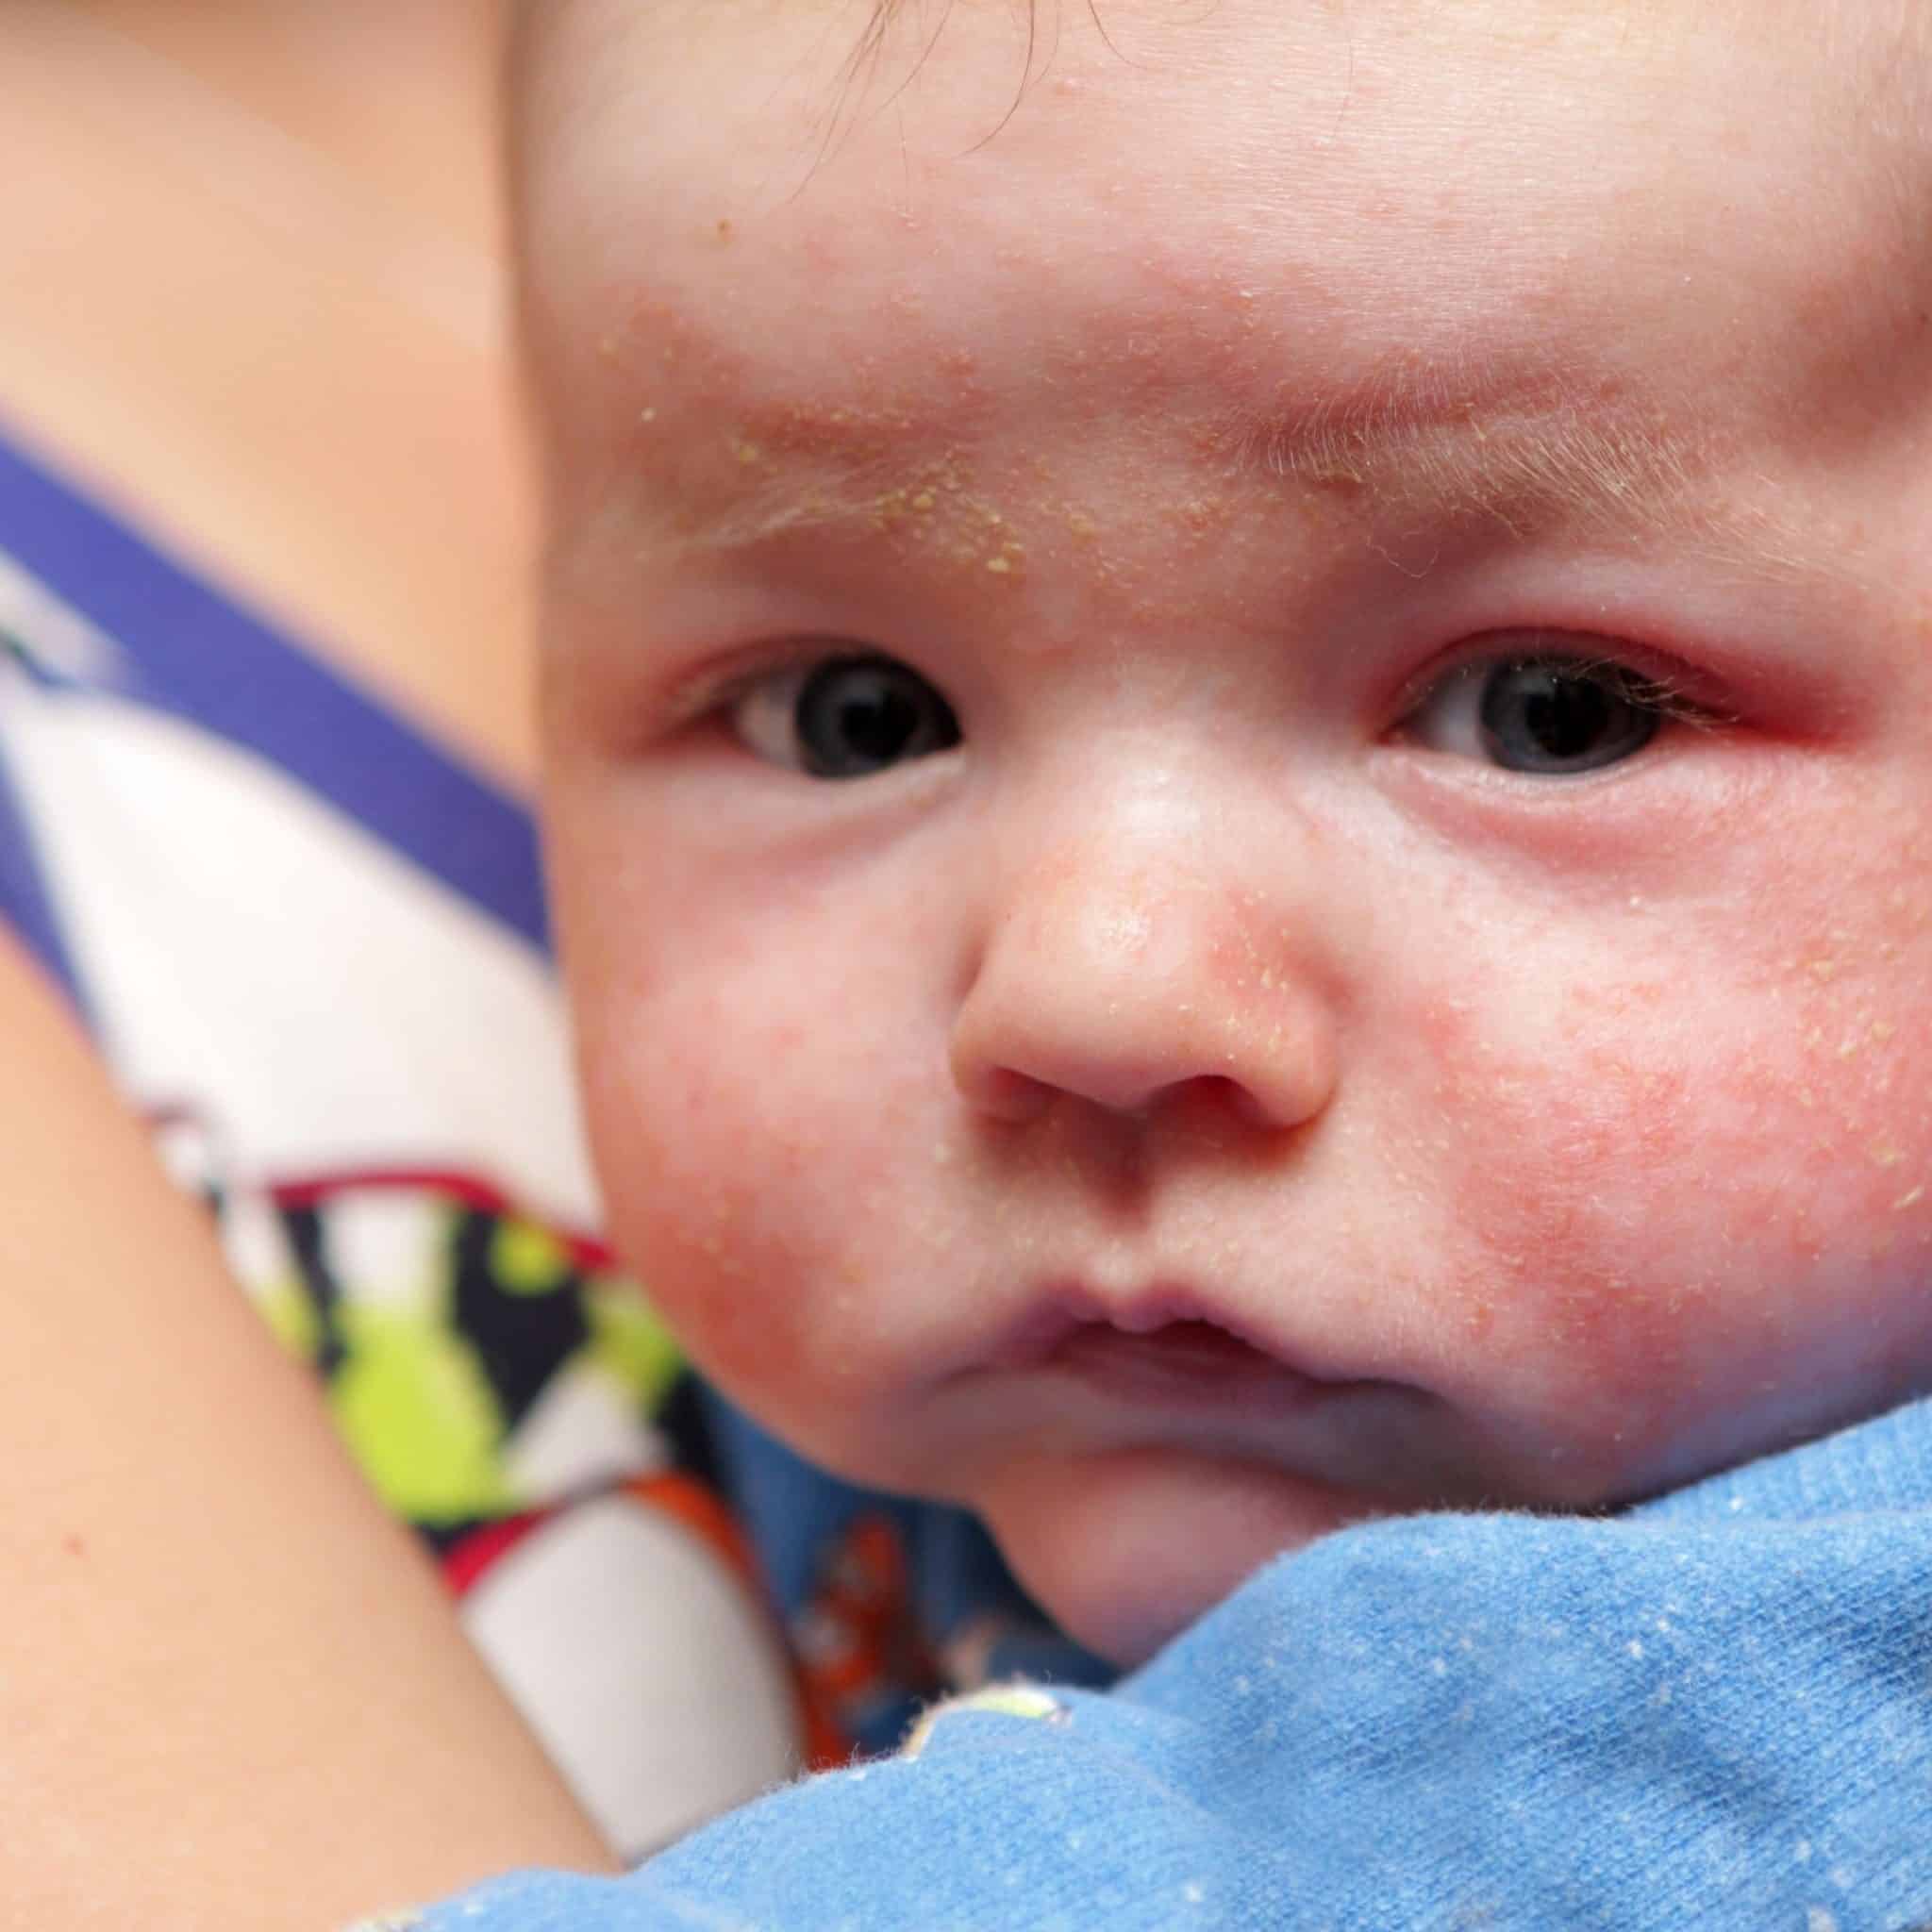 Common skin rashes in children